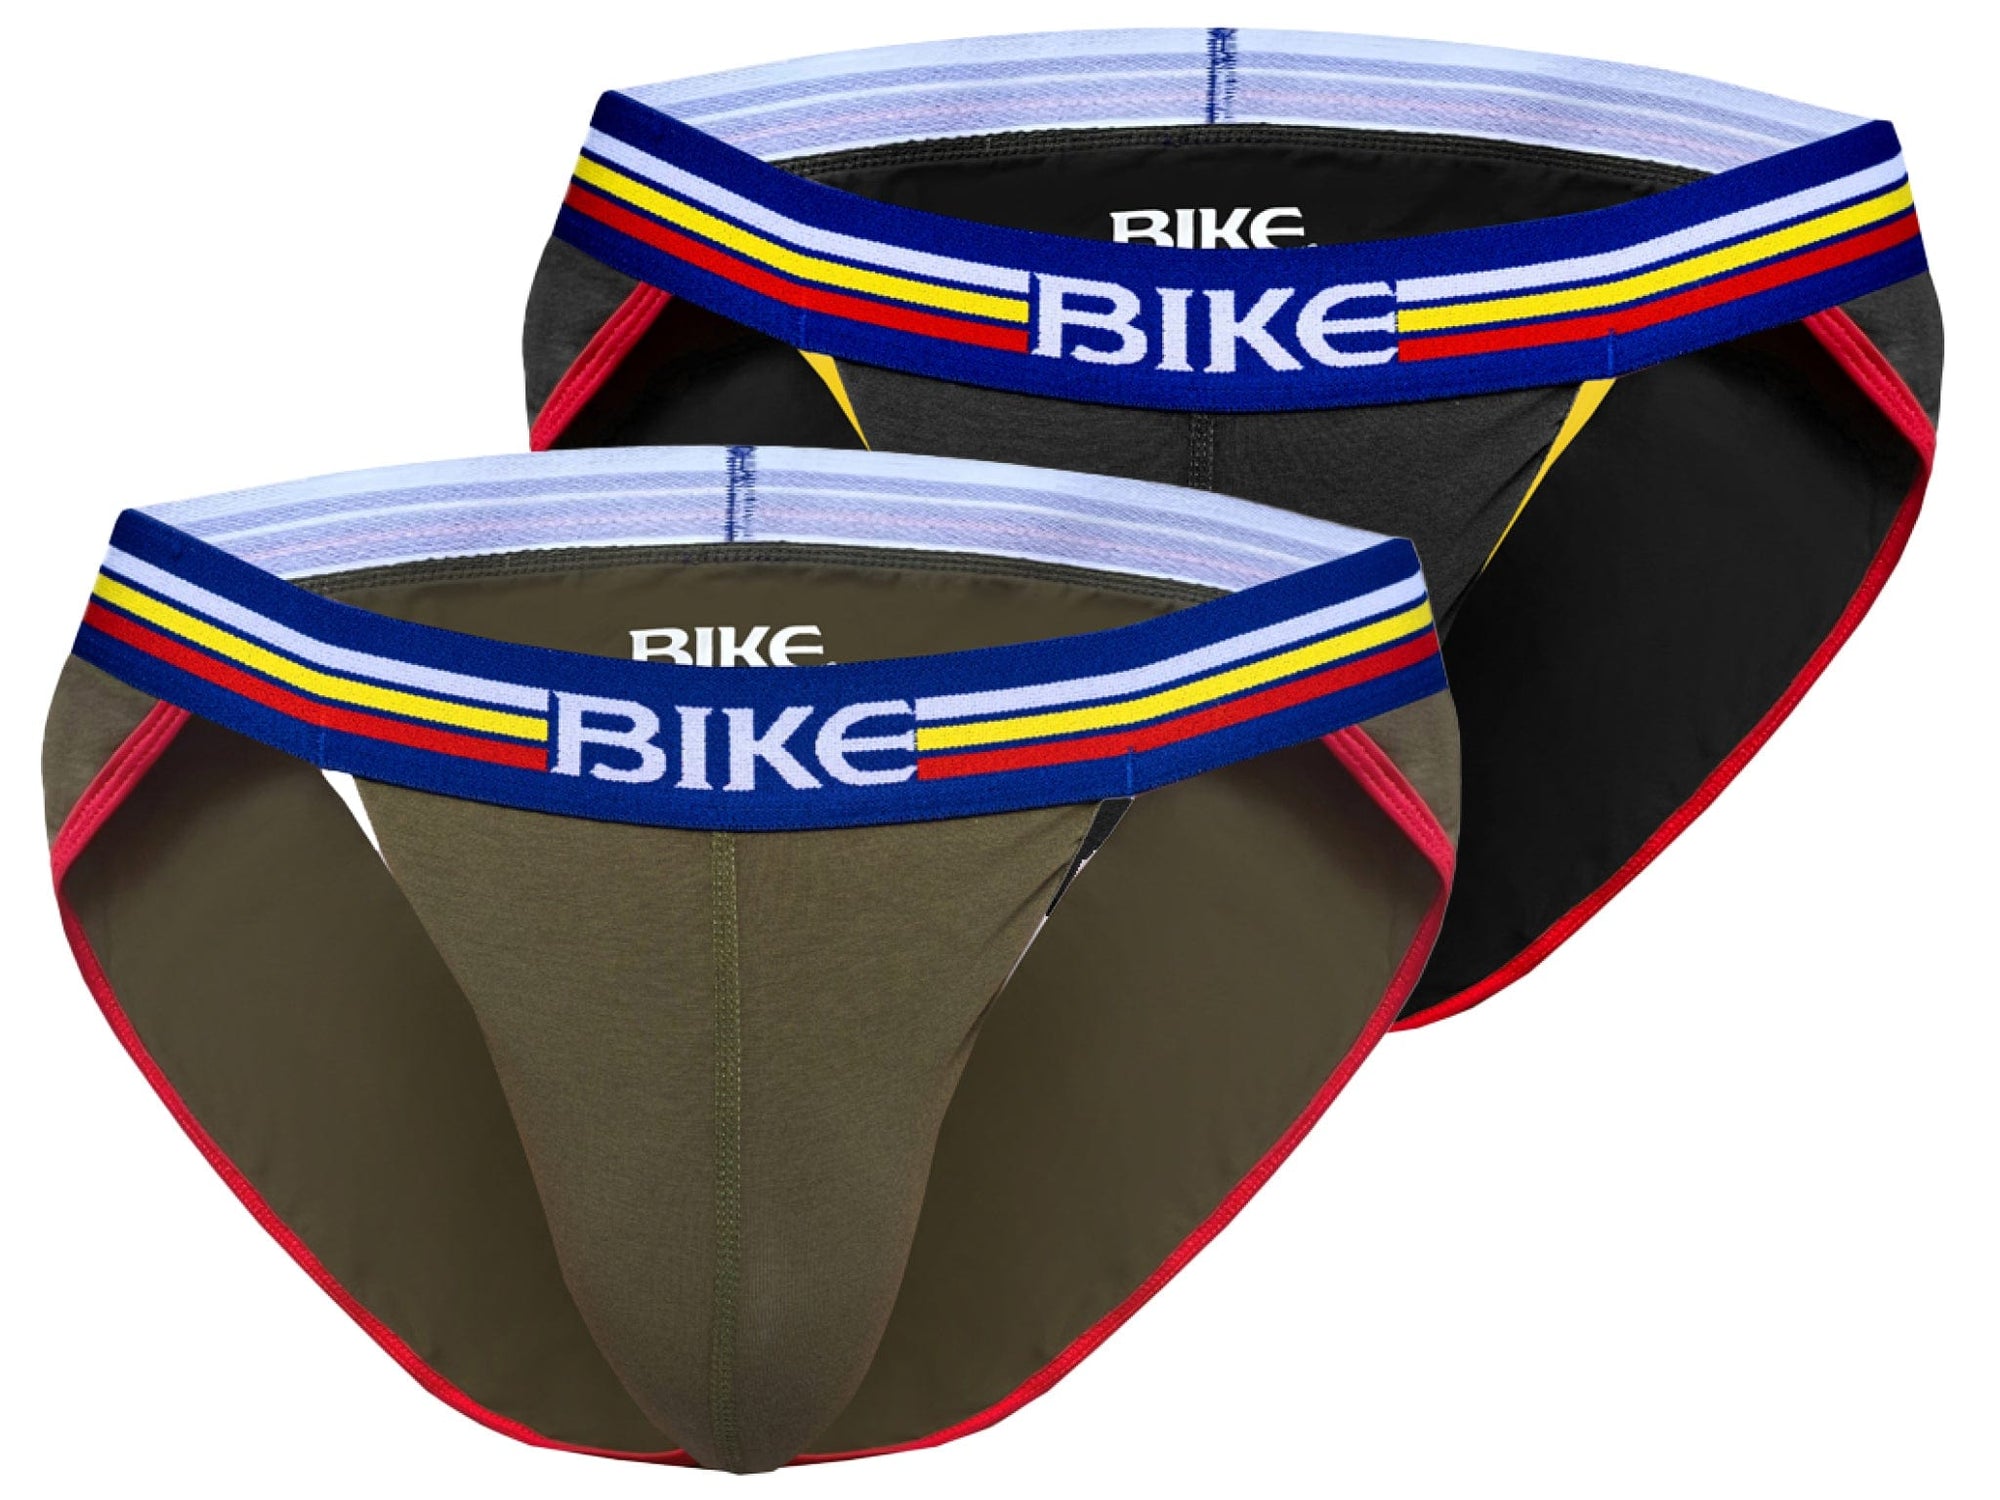 Black and olive Bike Athletic underwear jock briefs